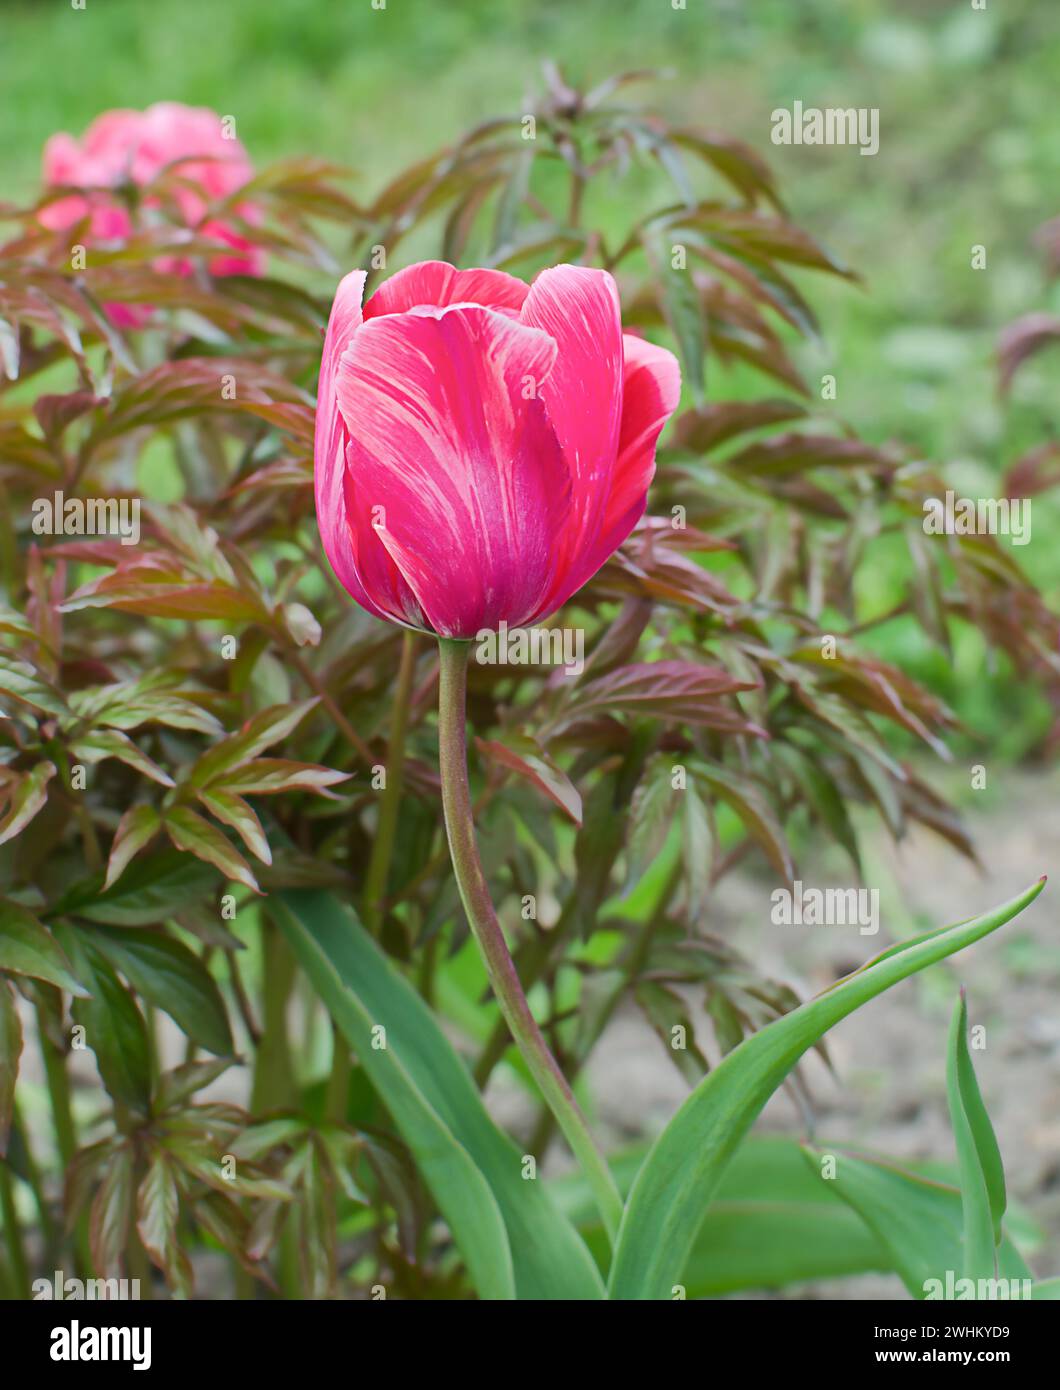 Pink tulip flower growing in the garden, Stock Photo